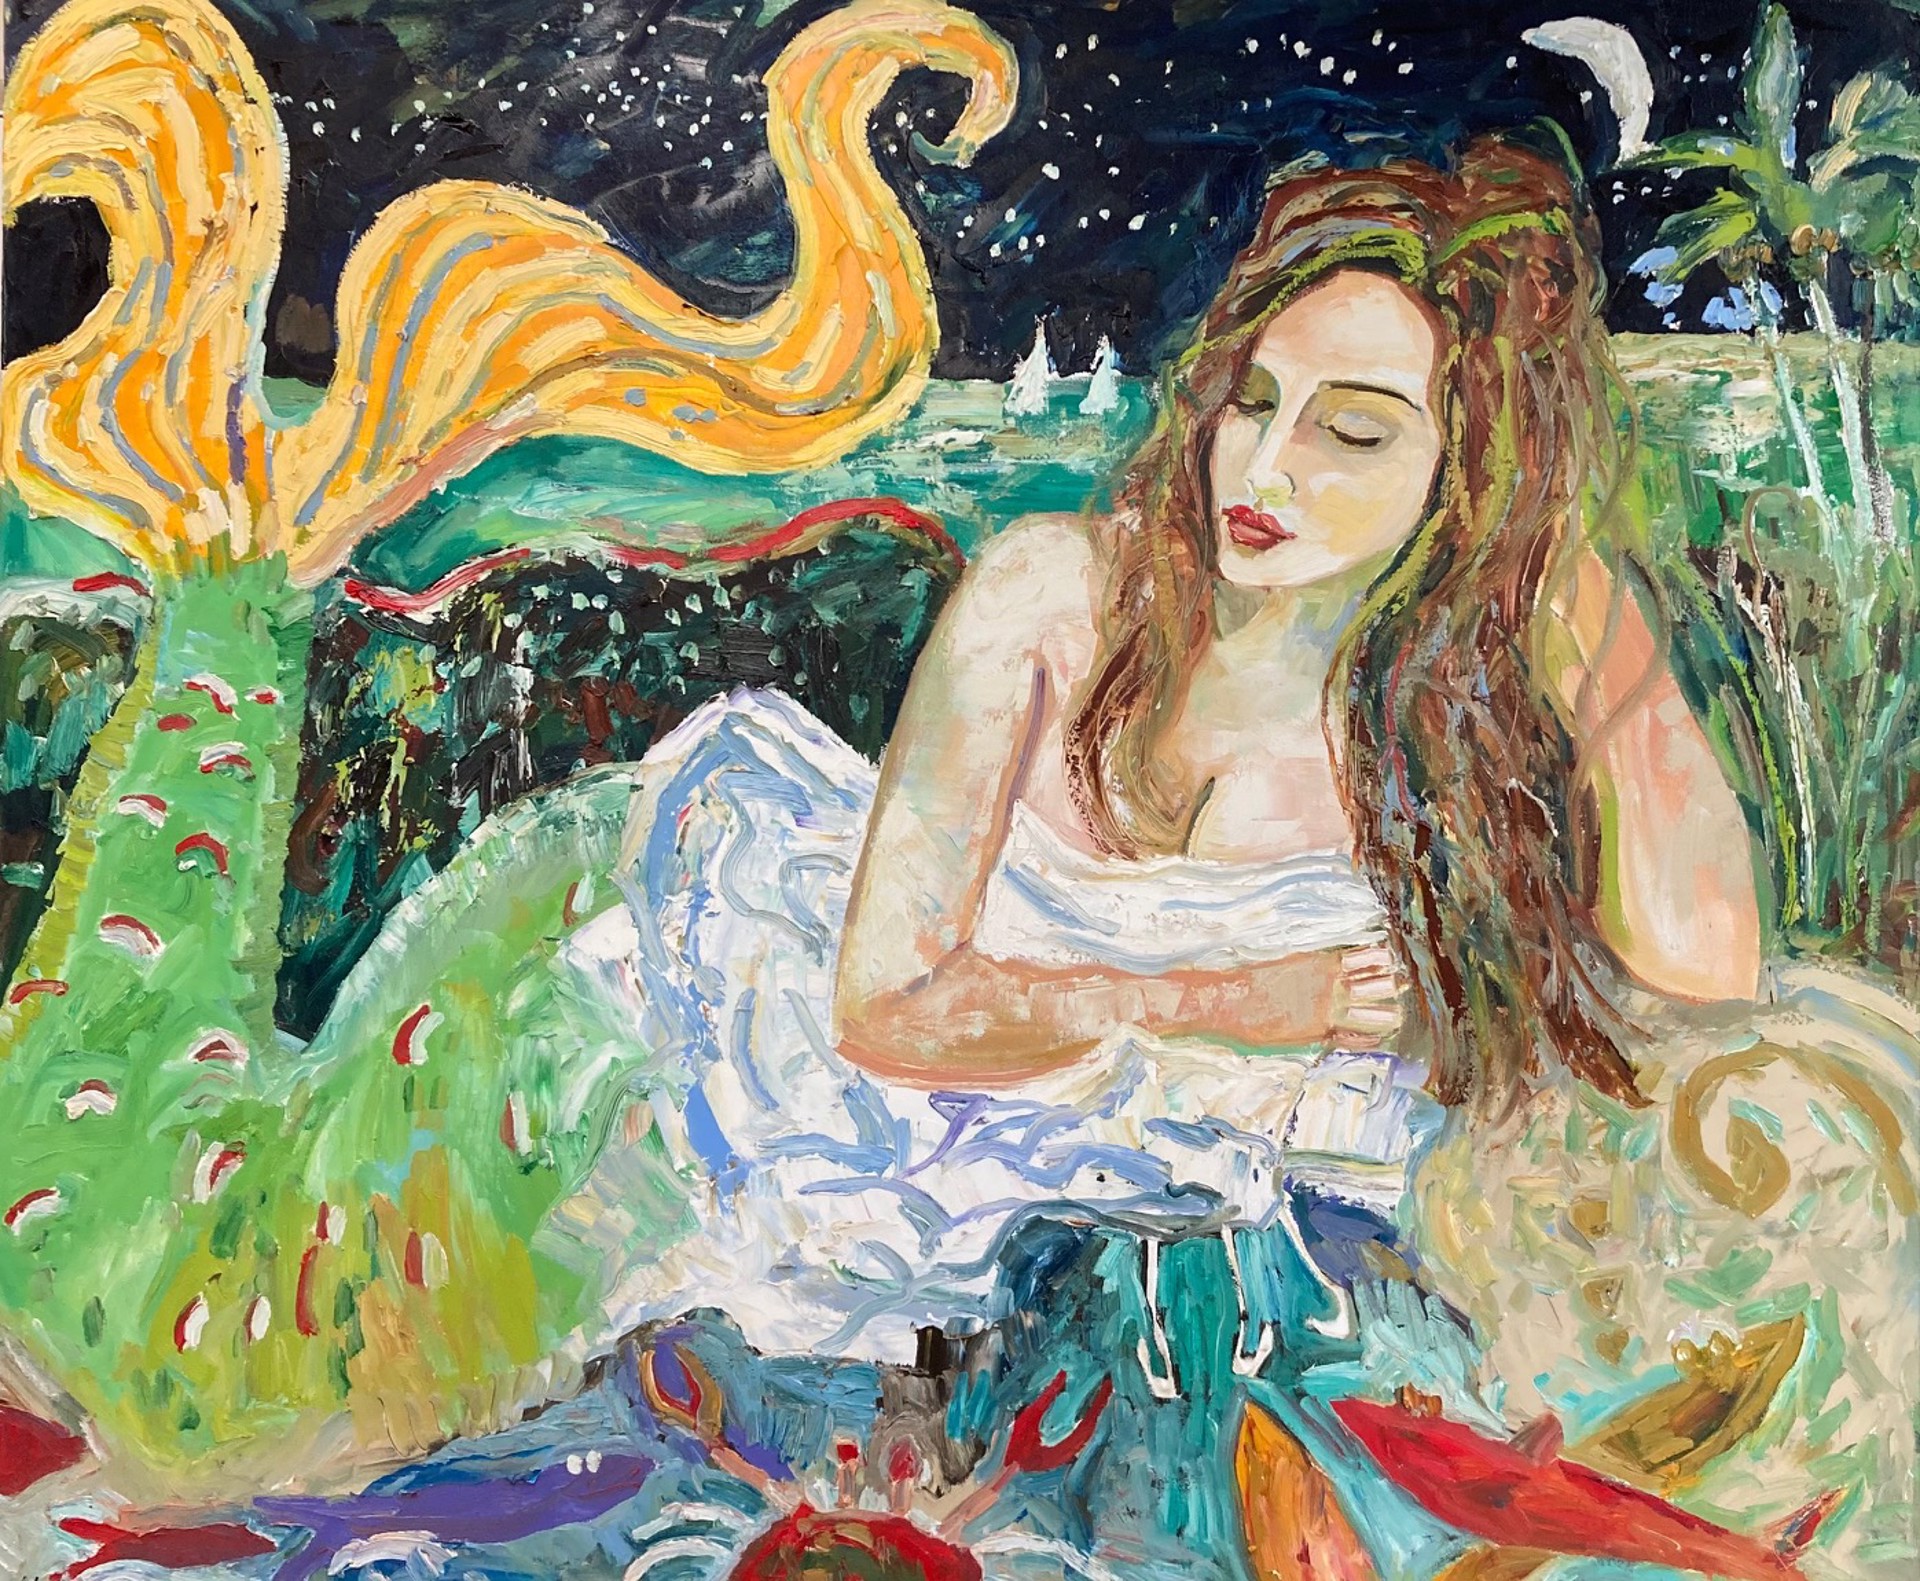 Midnight Mermaid sold by Brad Smith